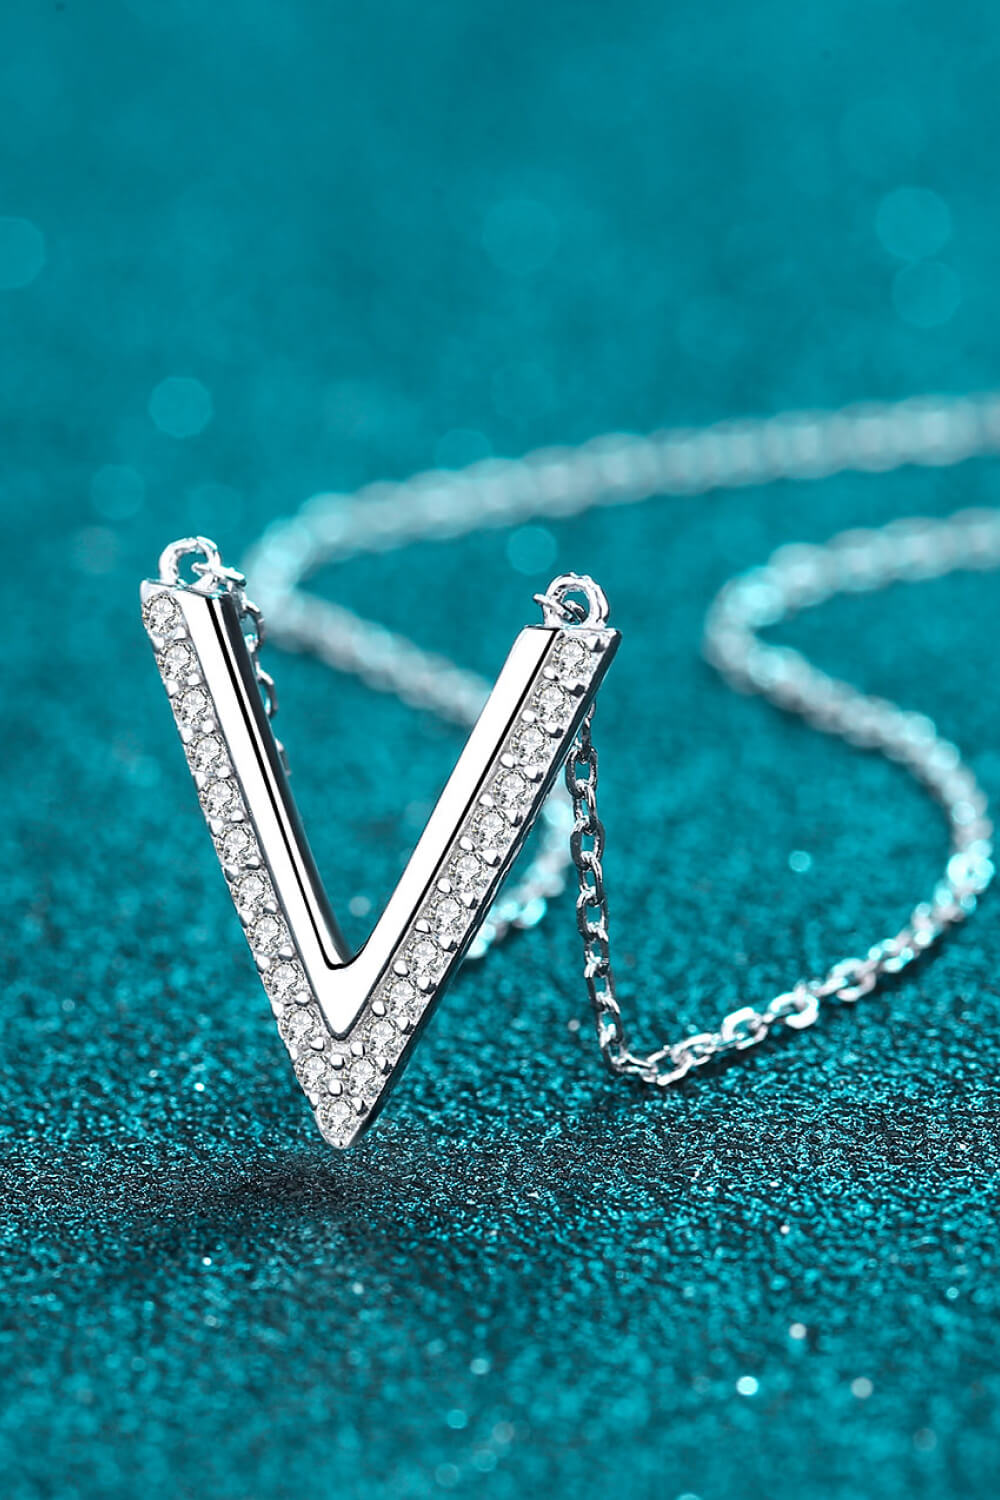 Sterling Silver V Letter Heart Necklace Silver Tiny Stamped V